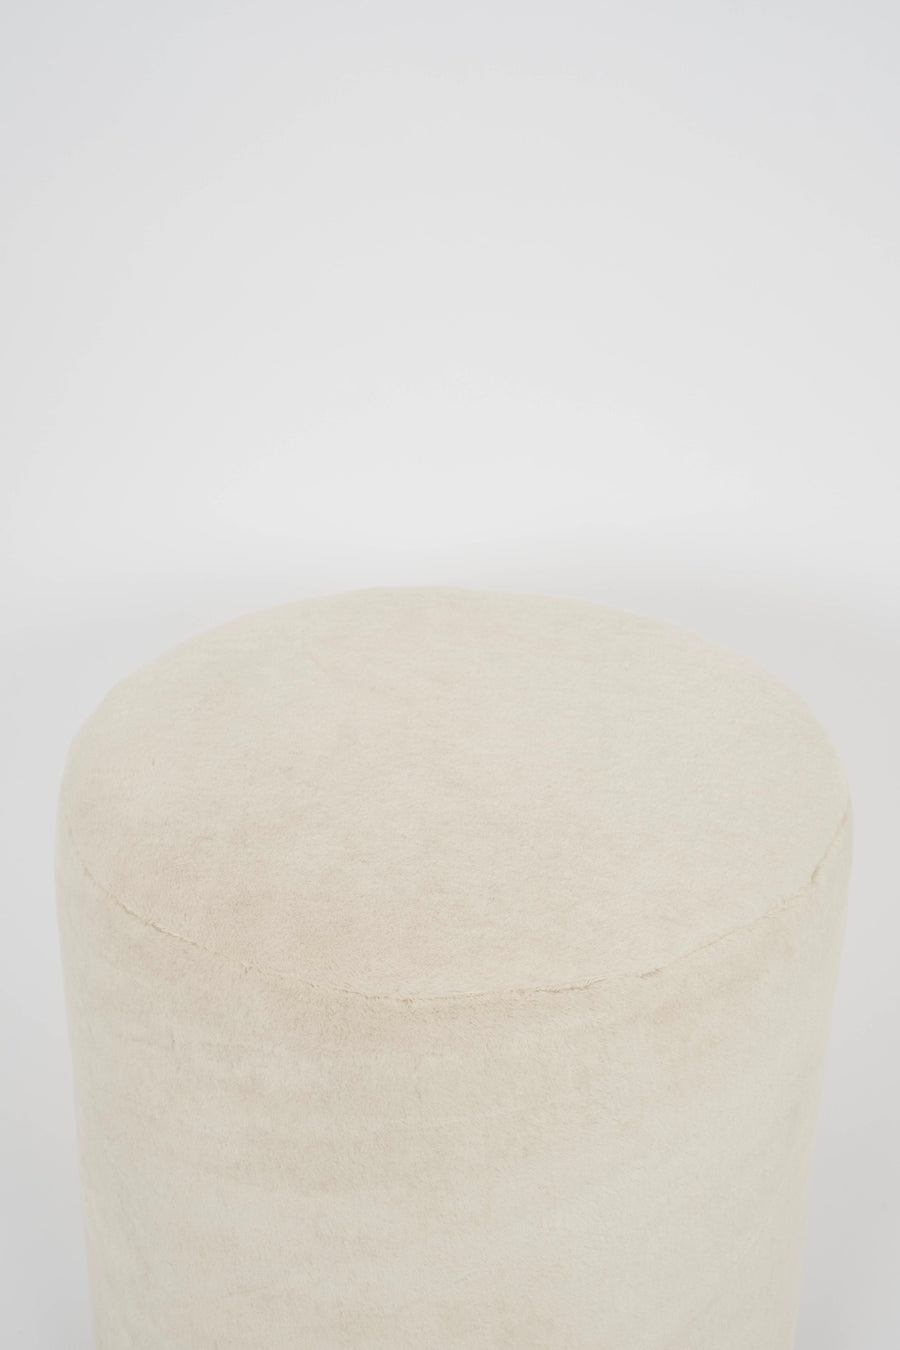 Cubist Creamy White Luxe Alpaca Fleece Pouf Ottoman With White Oak Base